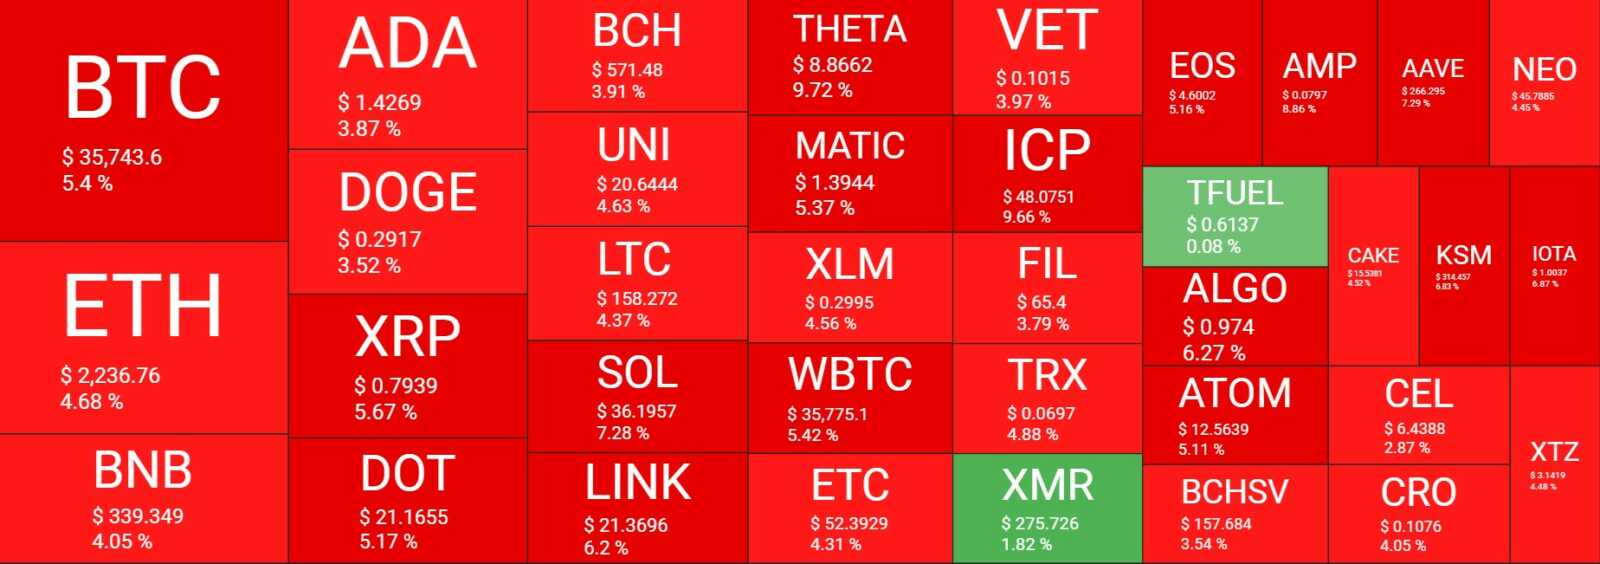 BTC, Bitcoin, Ethereum, ETH, market cap, ADA, Cardano, Ripple, XRP